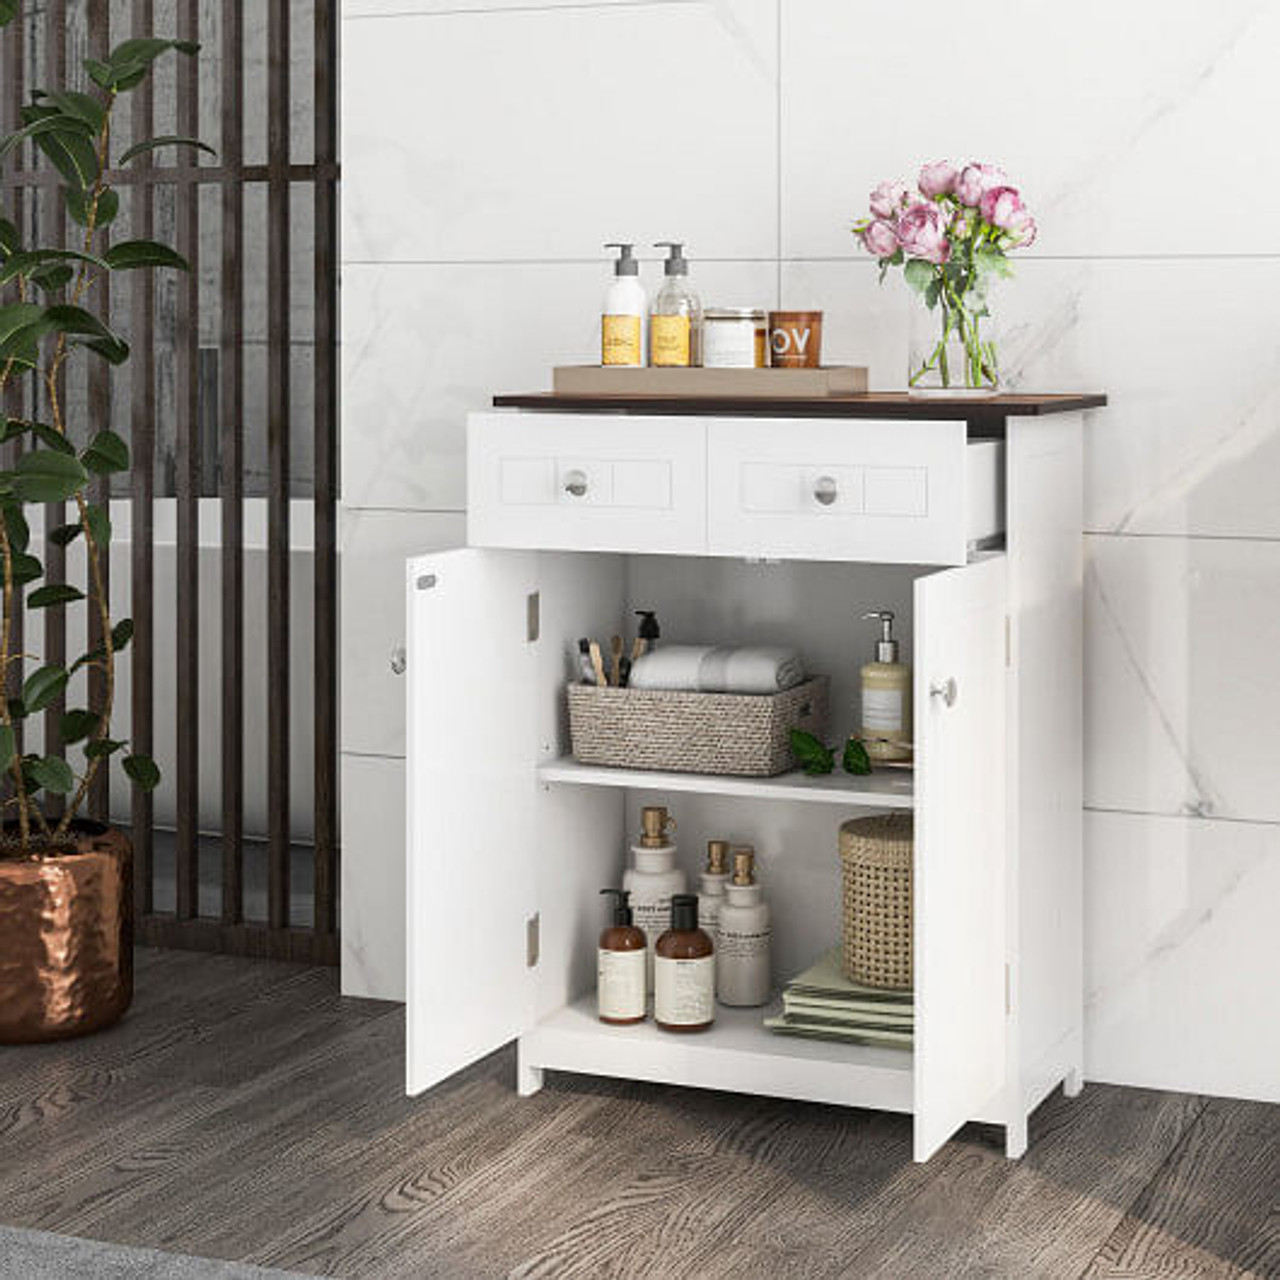 Freestanding Bathroom Floor Cabinet Storage Organizer with 2 Drawers-White